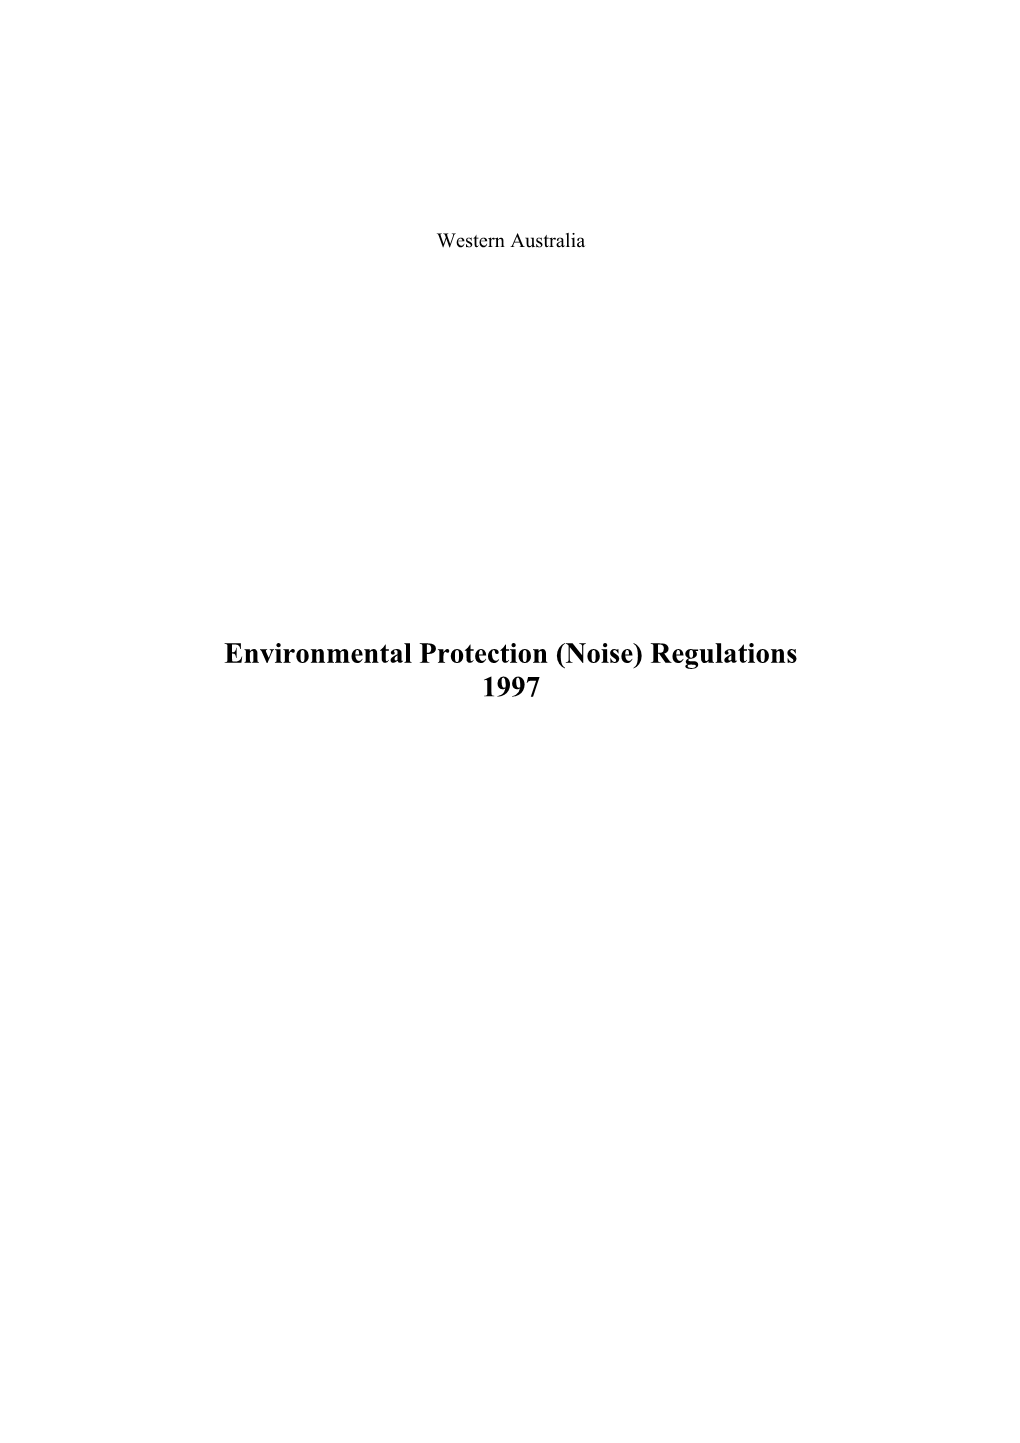 Environmental Protection (Noise) Regulations 1997 - 01-00-05